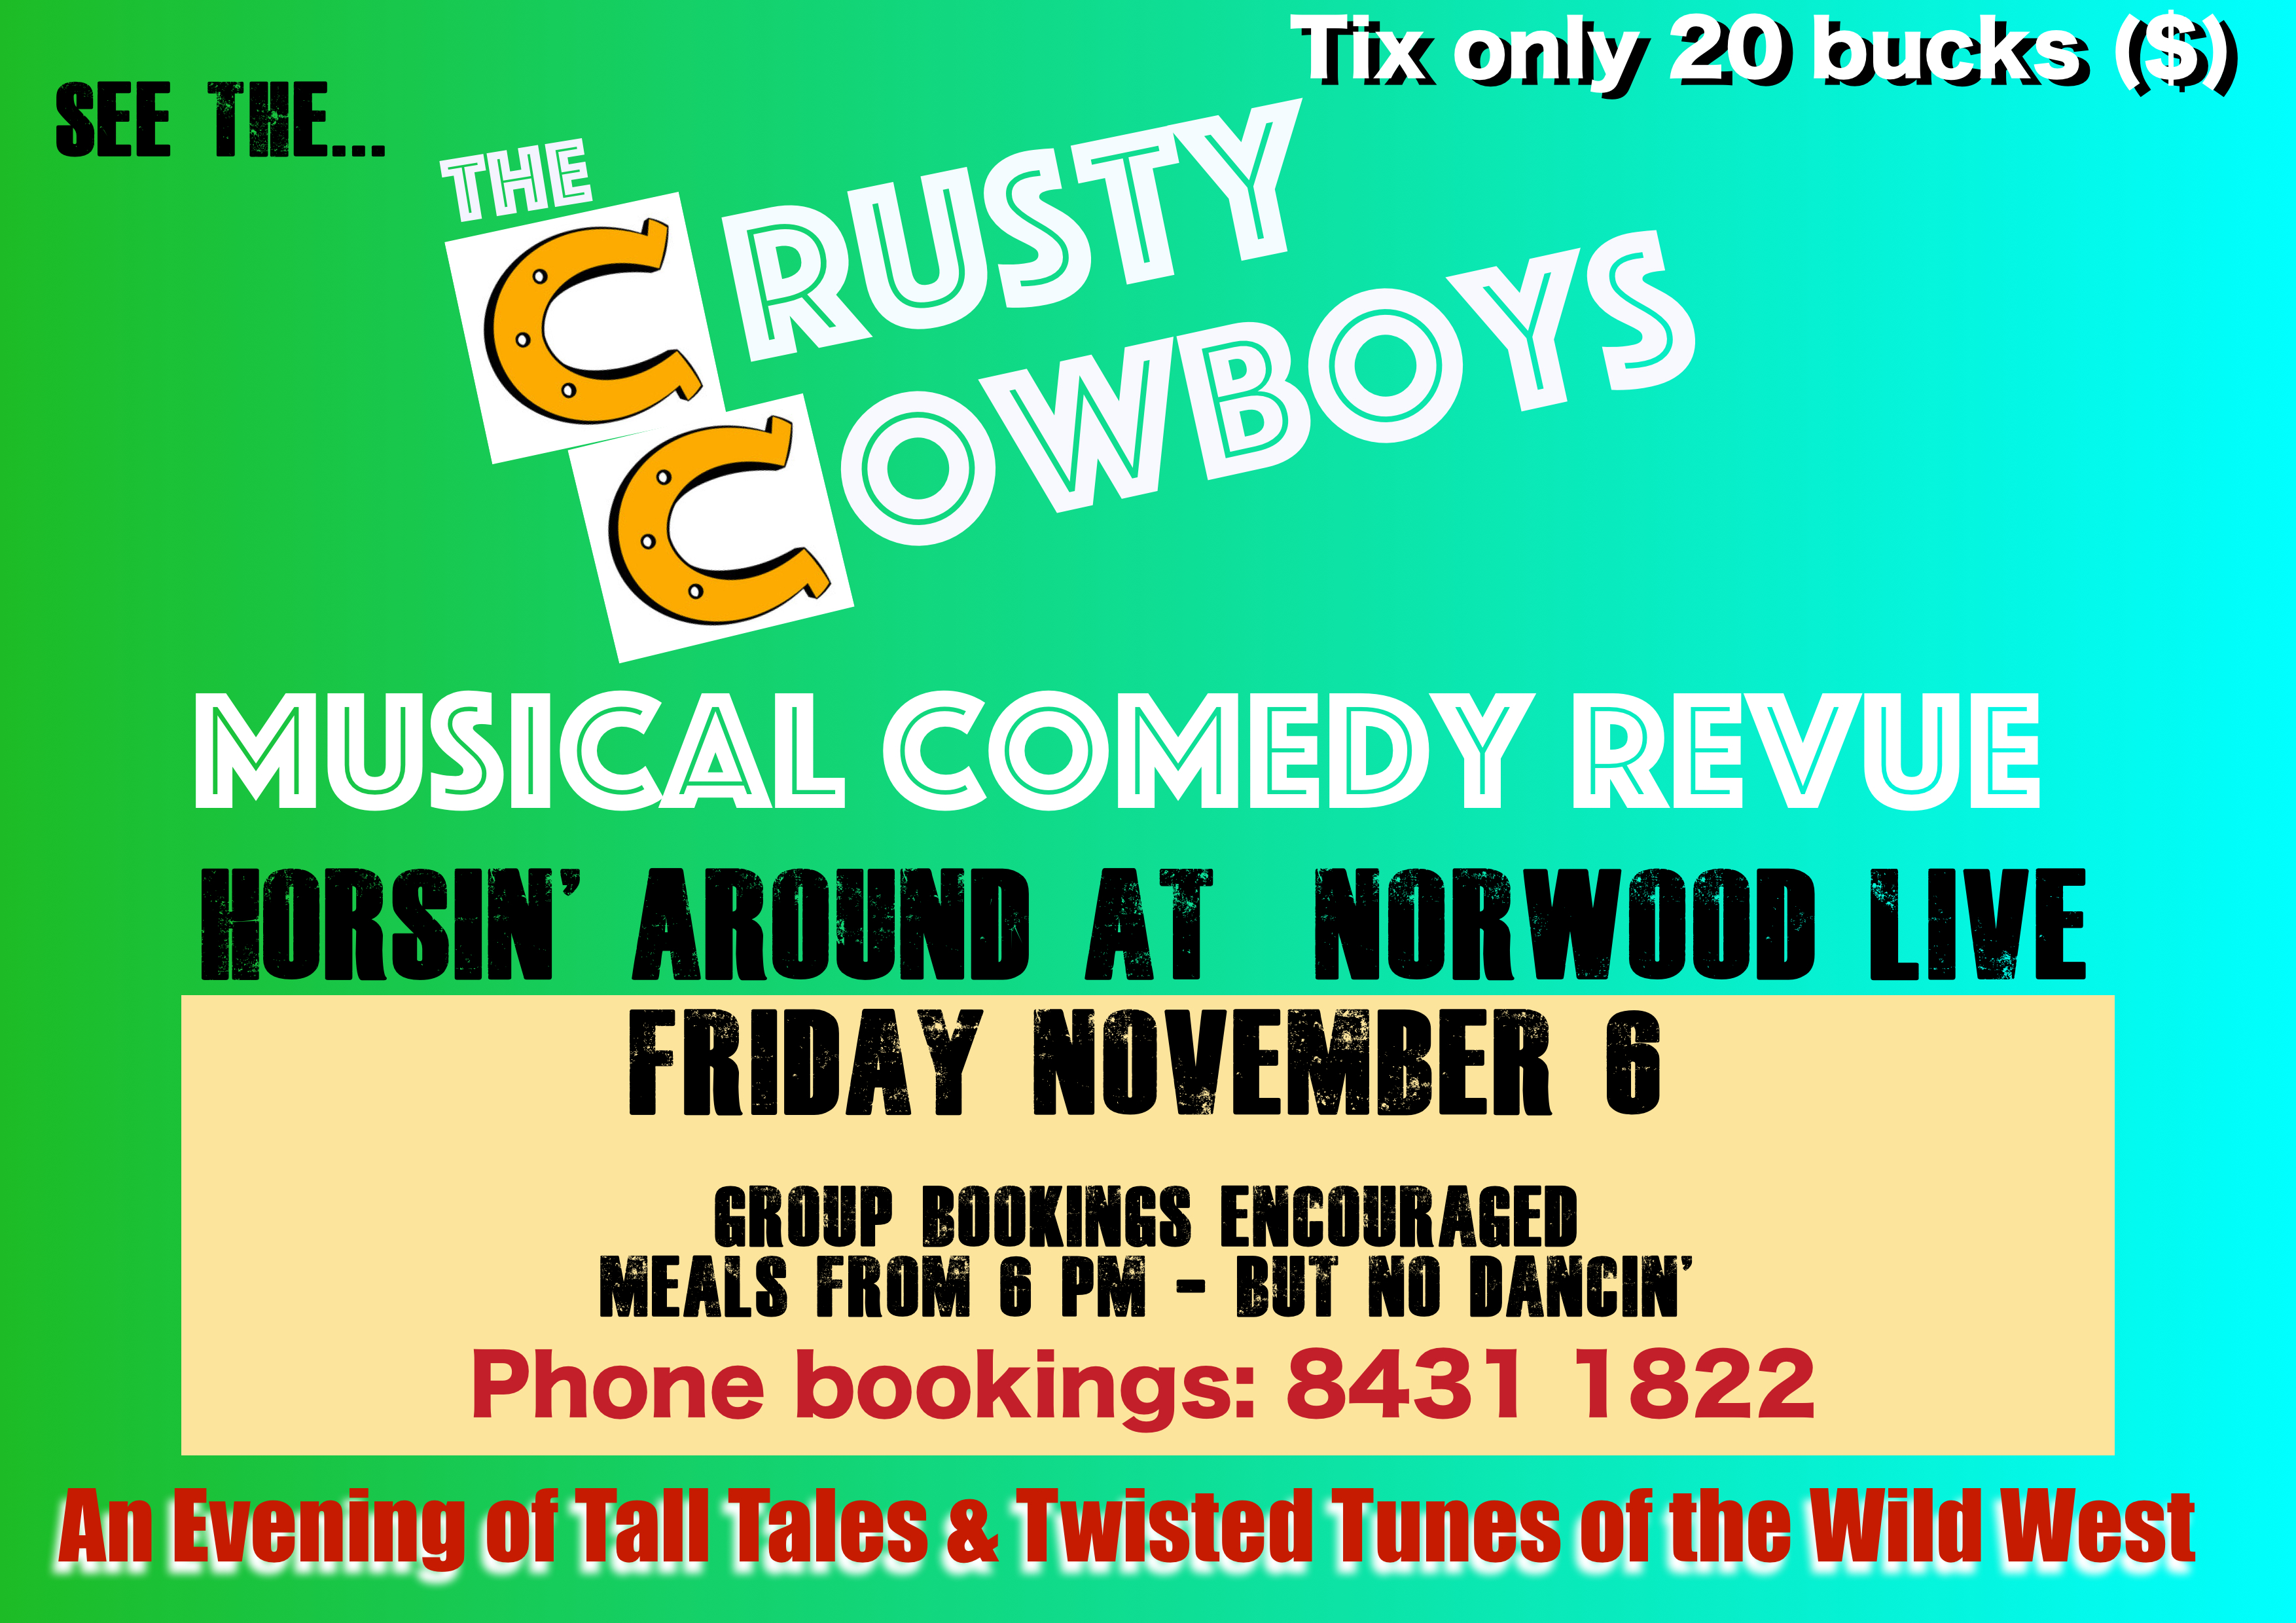 Crusty Cowboys Live!